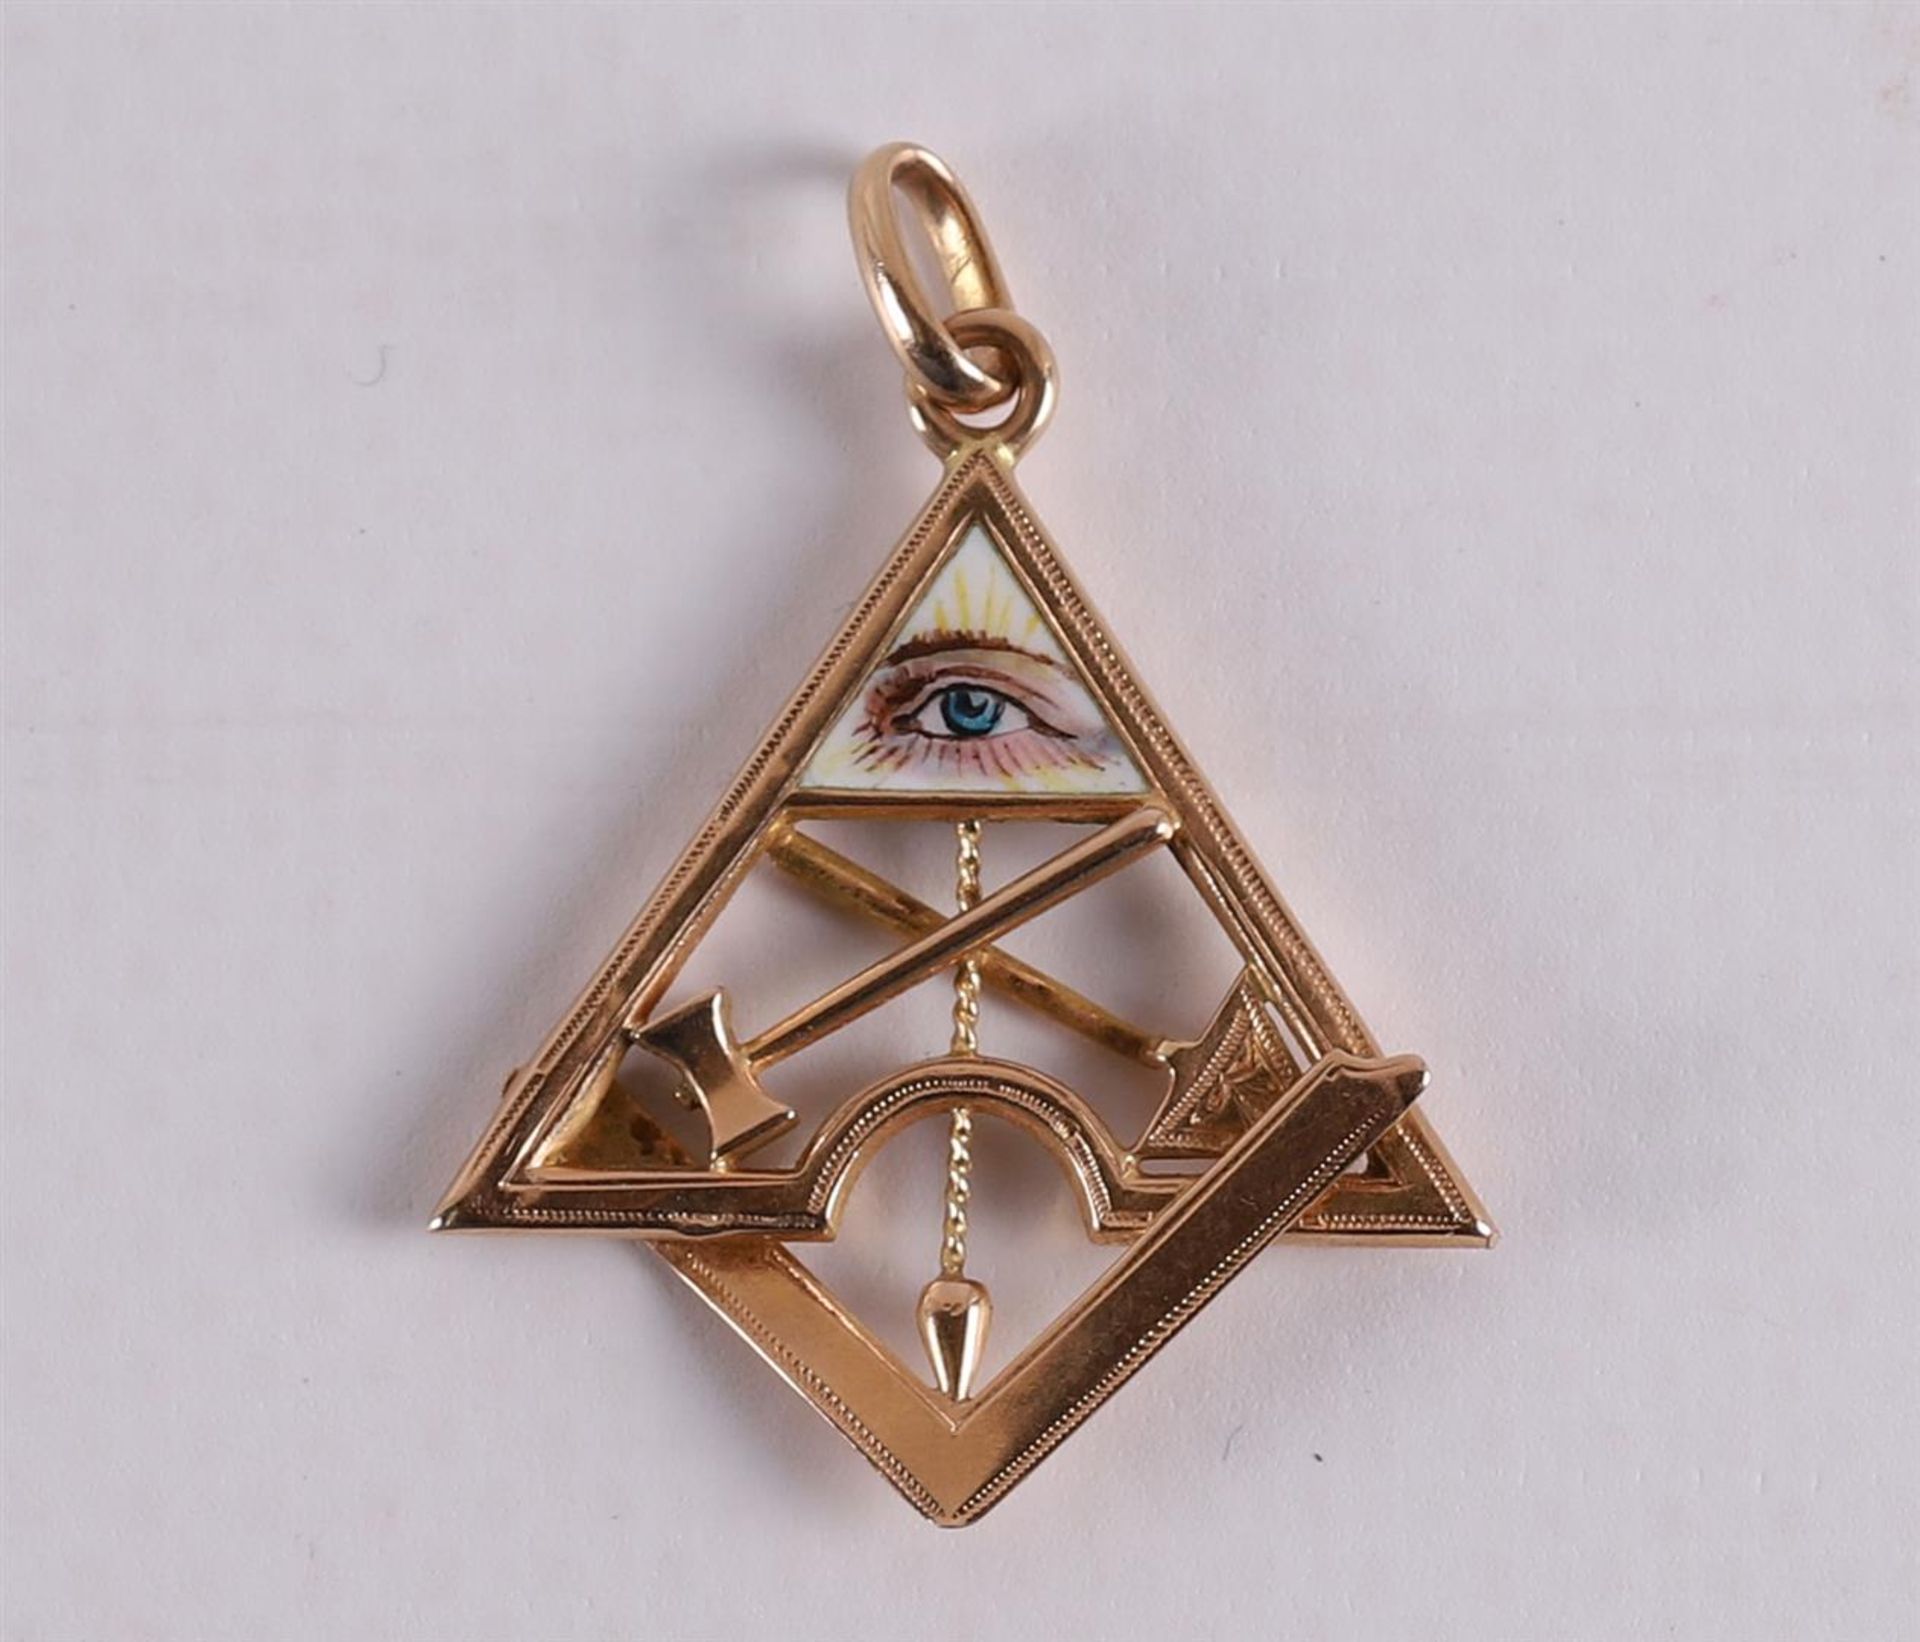 A gold pendant with symbols of Freemasonry. - Image 2 of 2